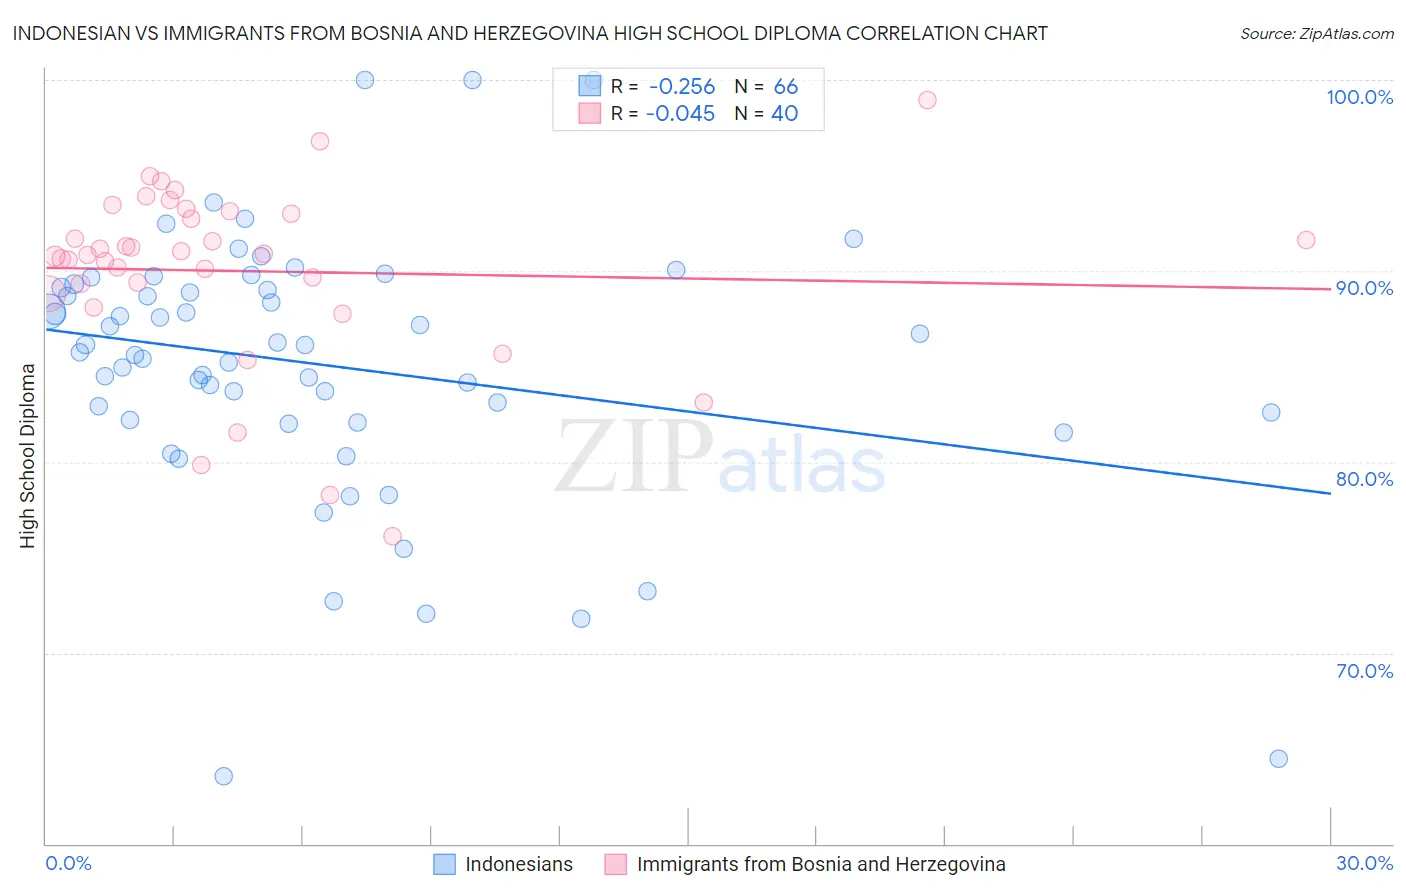 Indonesian vs Immigrants from Bosnia and Herzegovina High School Diploma